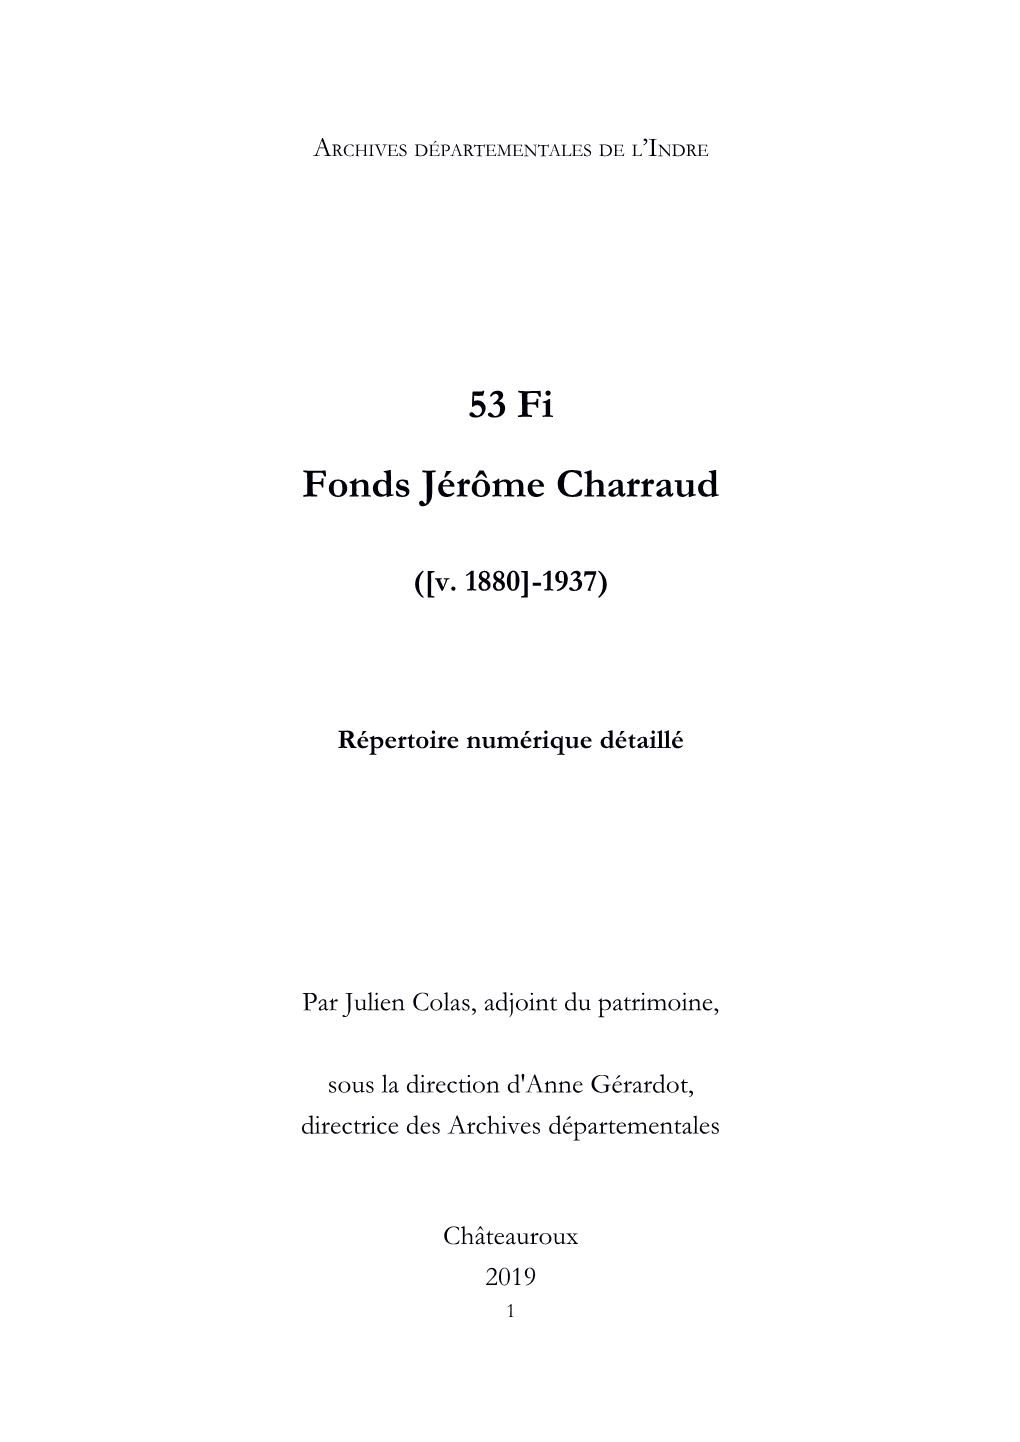 53 Fi Fonds Jérôme Charraud